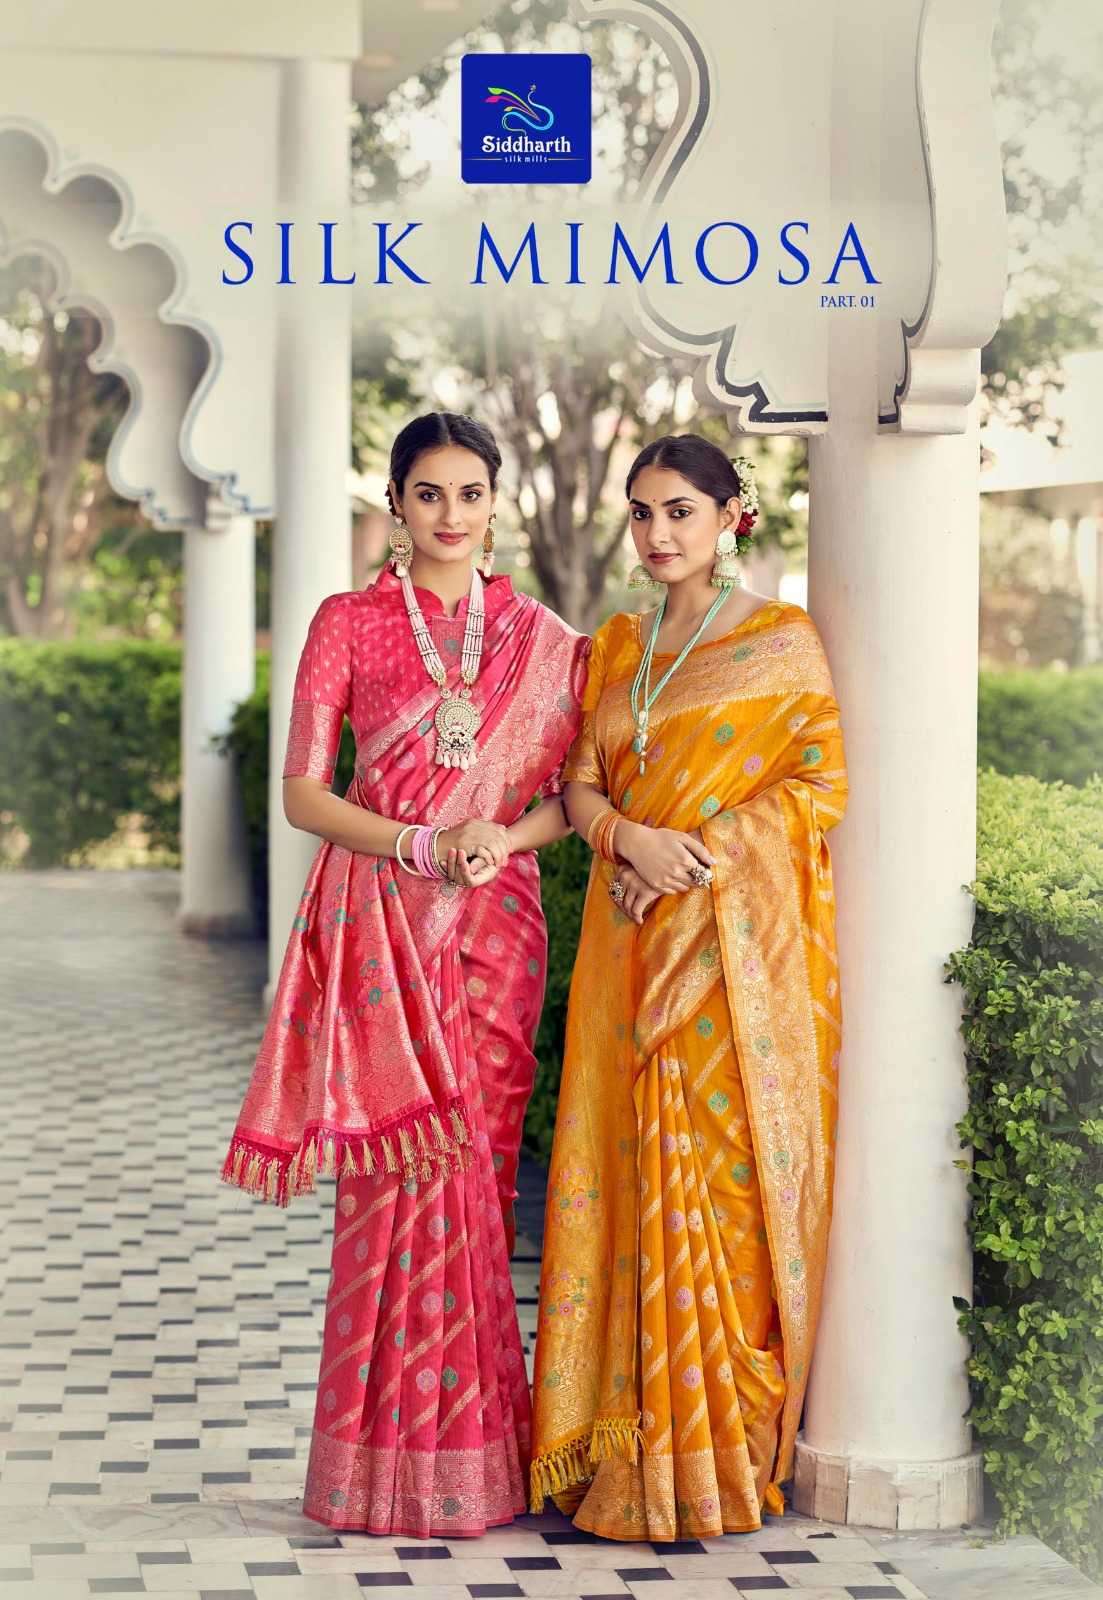 siddharth silk mills Silk mimosa series 4101-4106 silk saree